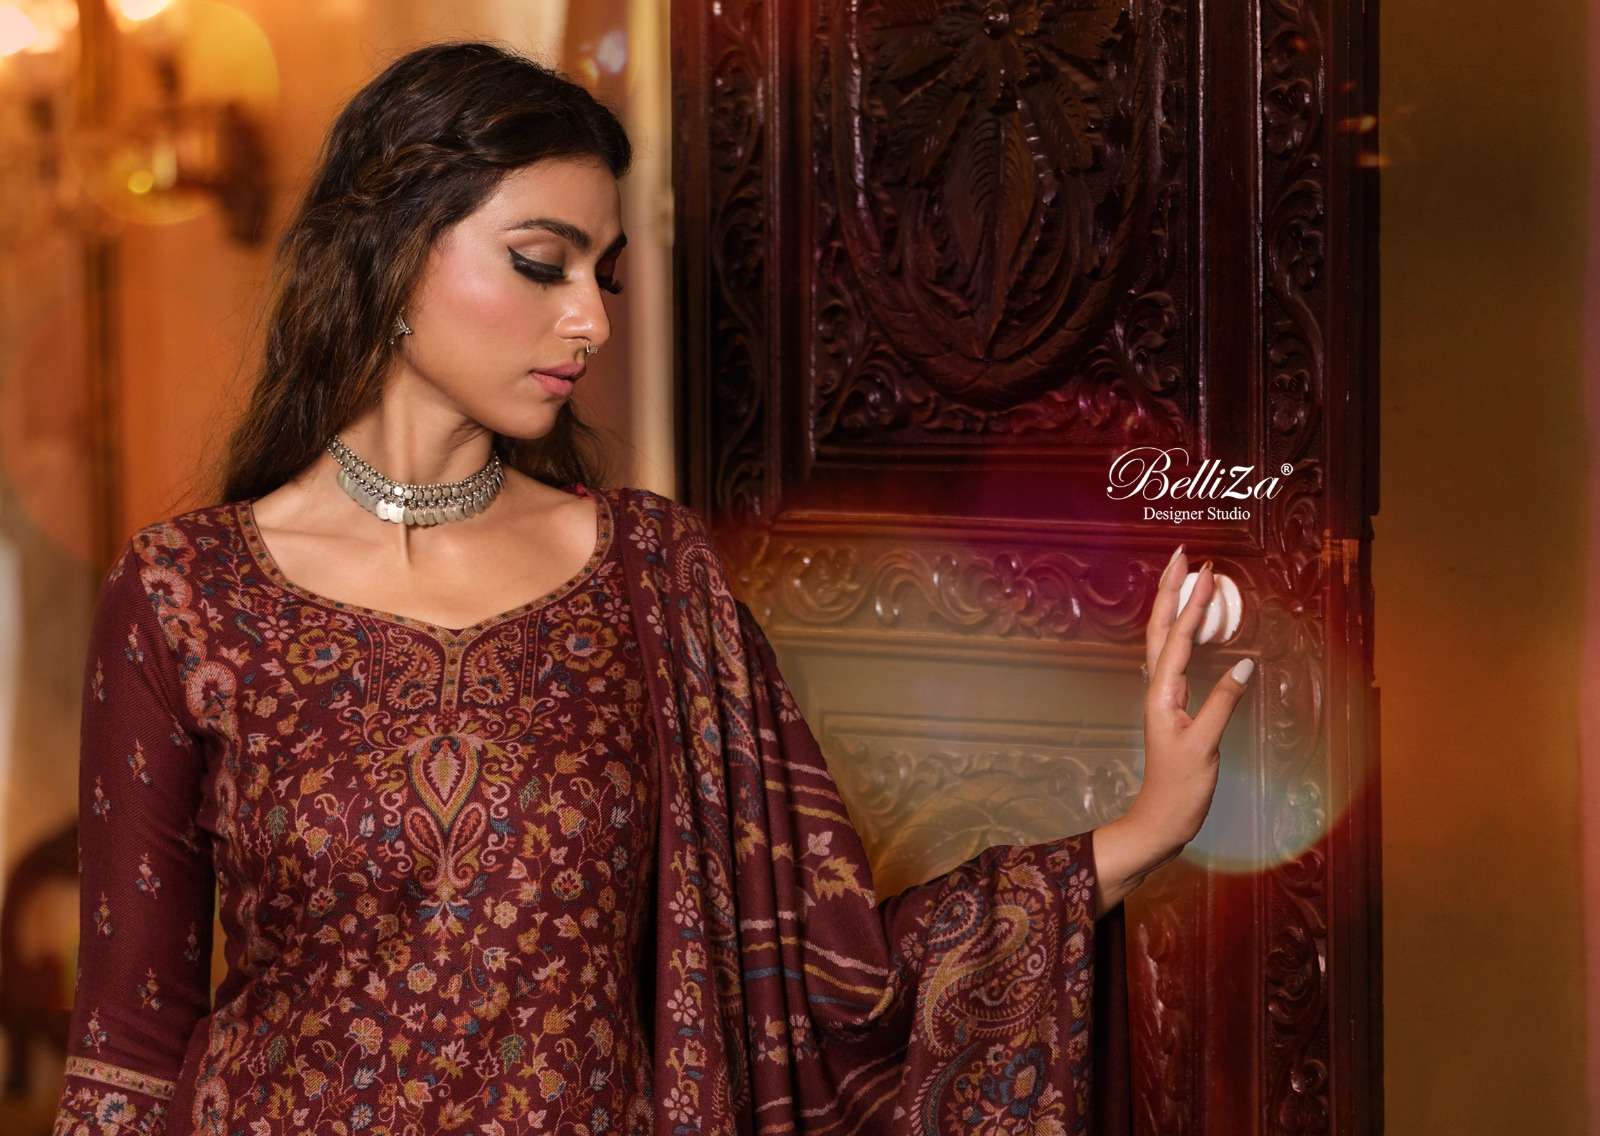 belliza cashmera kaani designer latest pakistani festive wear salwar kameez wholesaler india